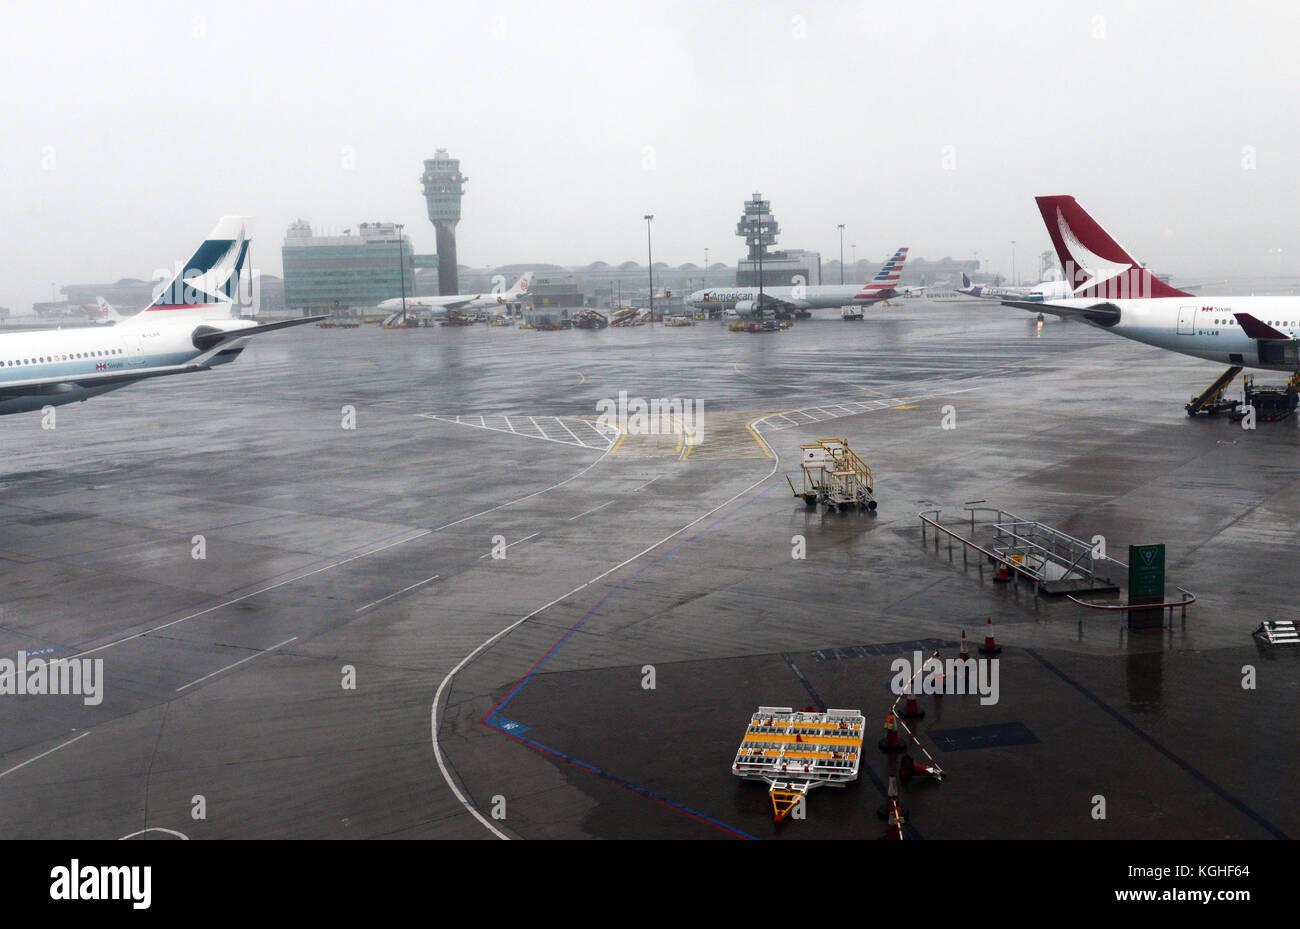 Rainy weather at the Hong Kong international airport. Stock Photo